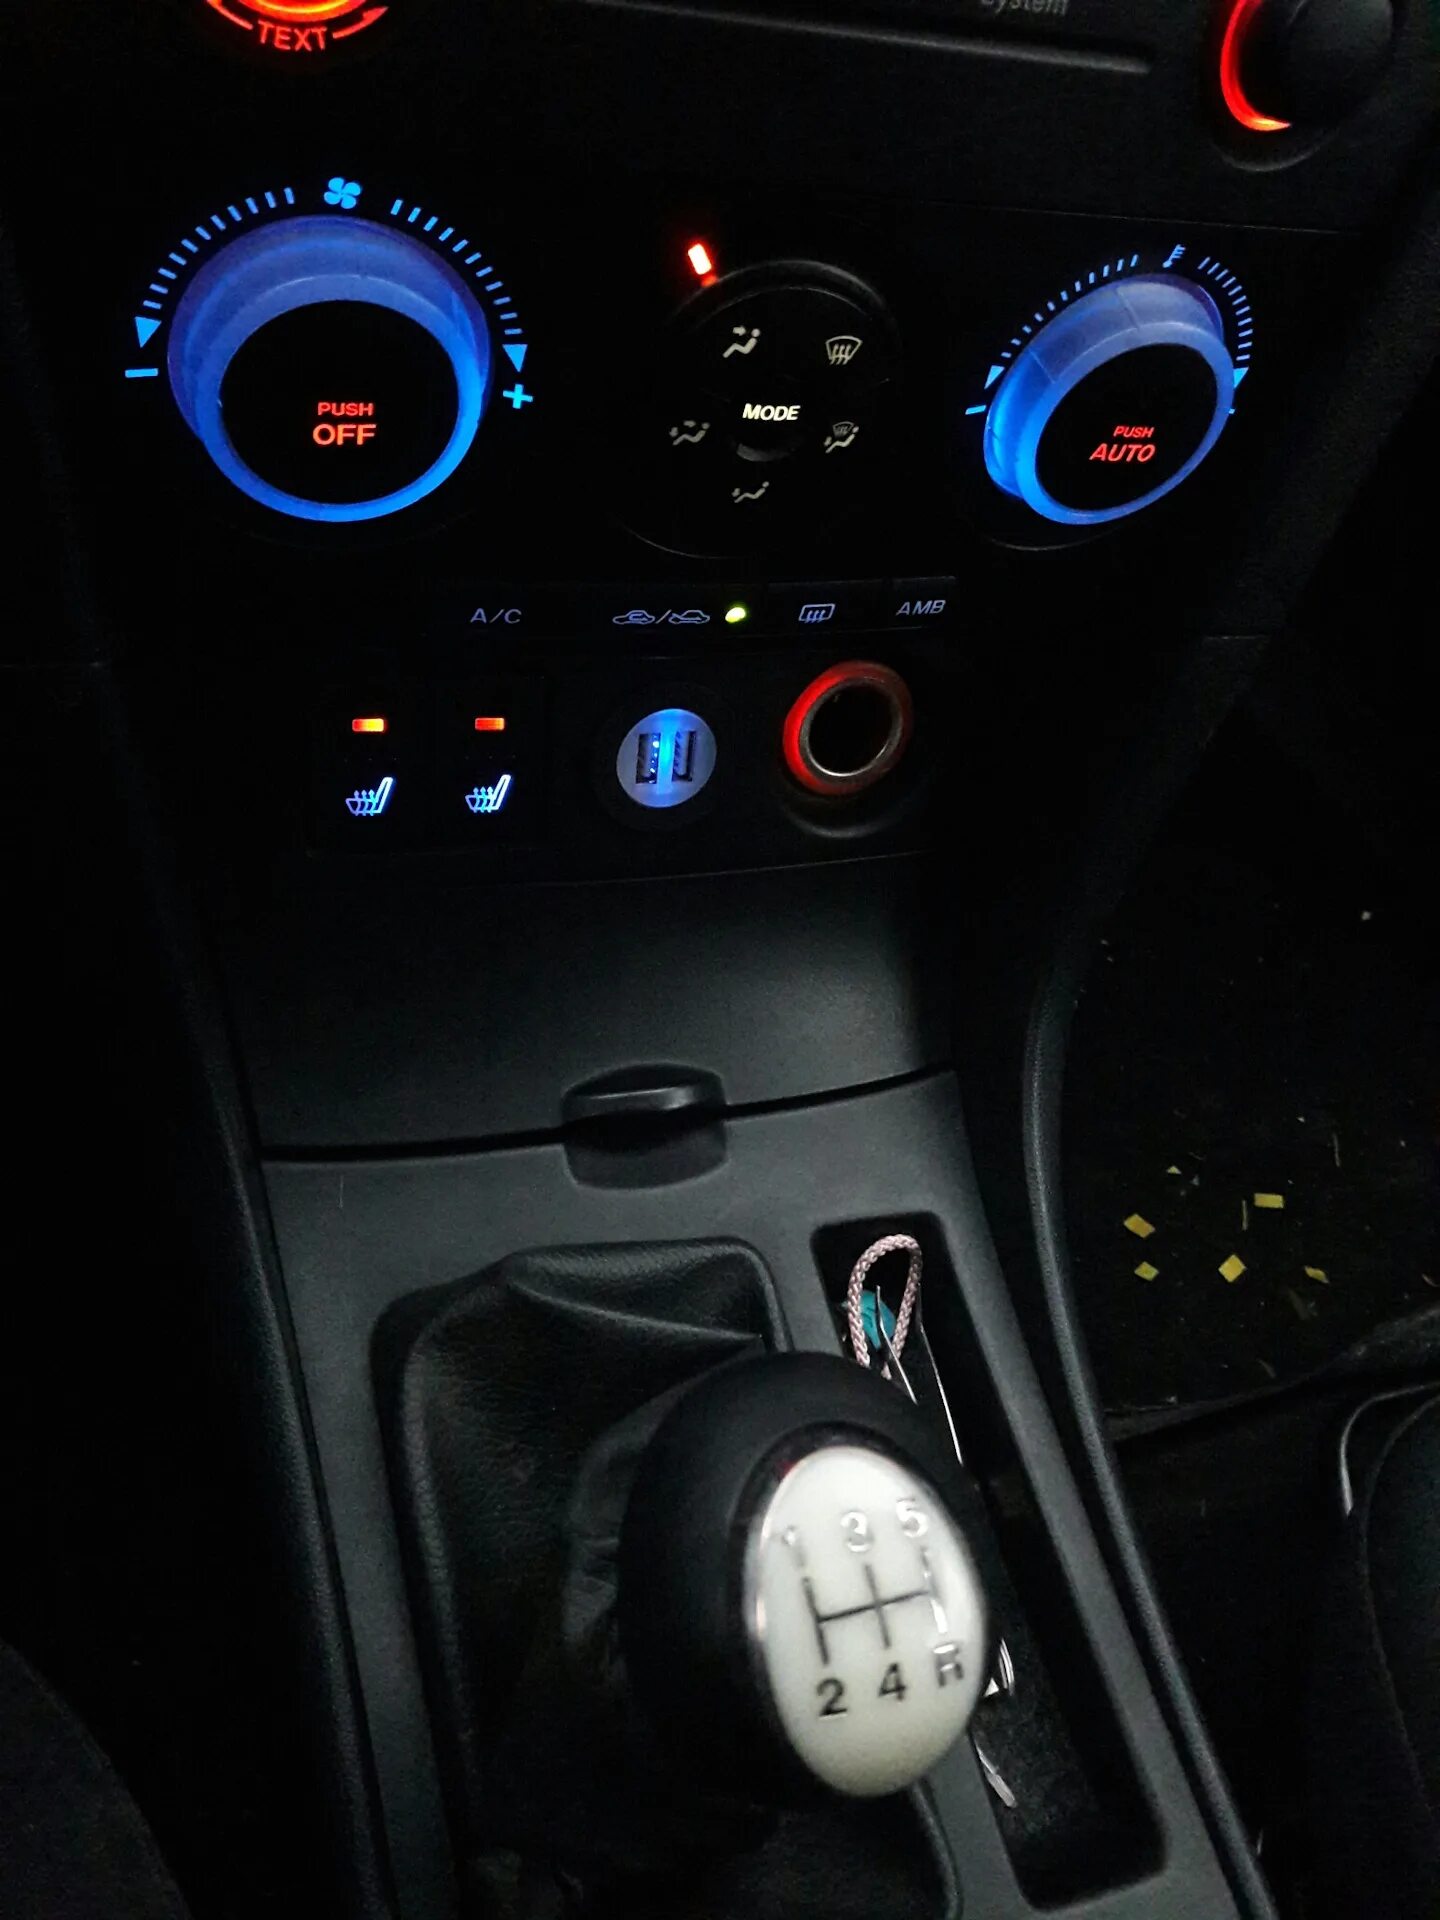 Кнопки мазда 3 бк. Подсветка консоли Мазда 3 БК. Подсветка кнопок Мазда 3 BK. Mazda 3 BK Пересвет салона. Подсветка центральной консоли Мазда 3 BK.